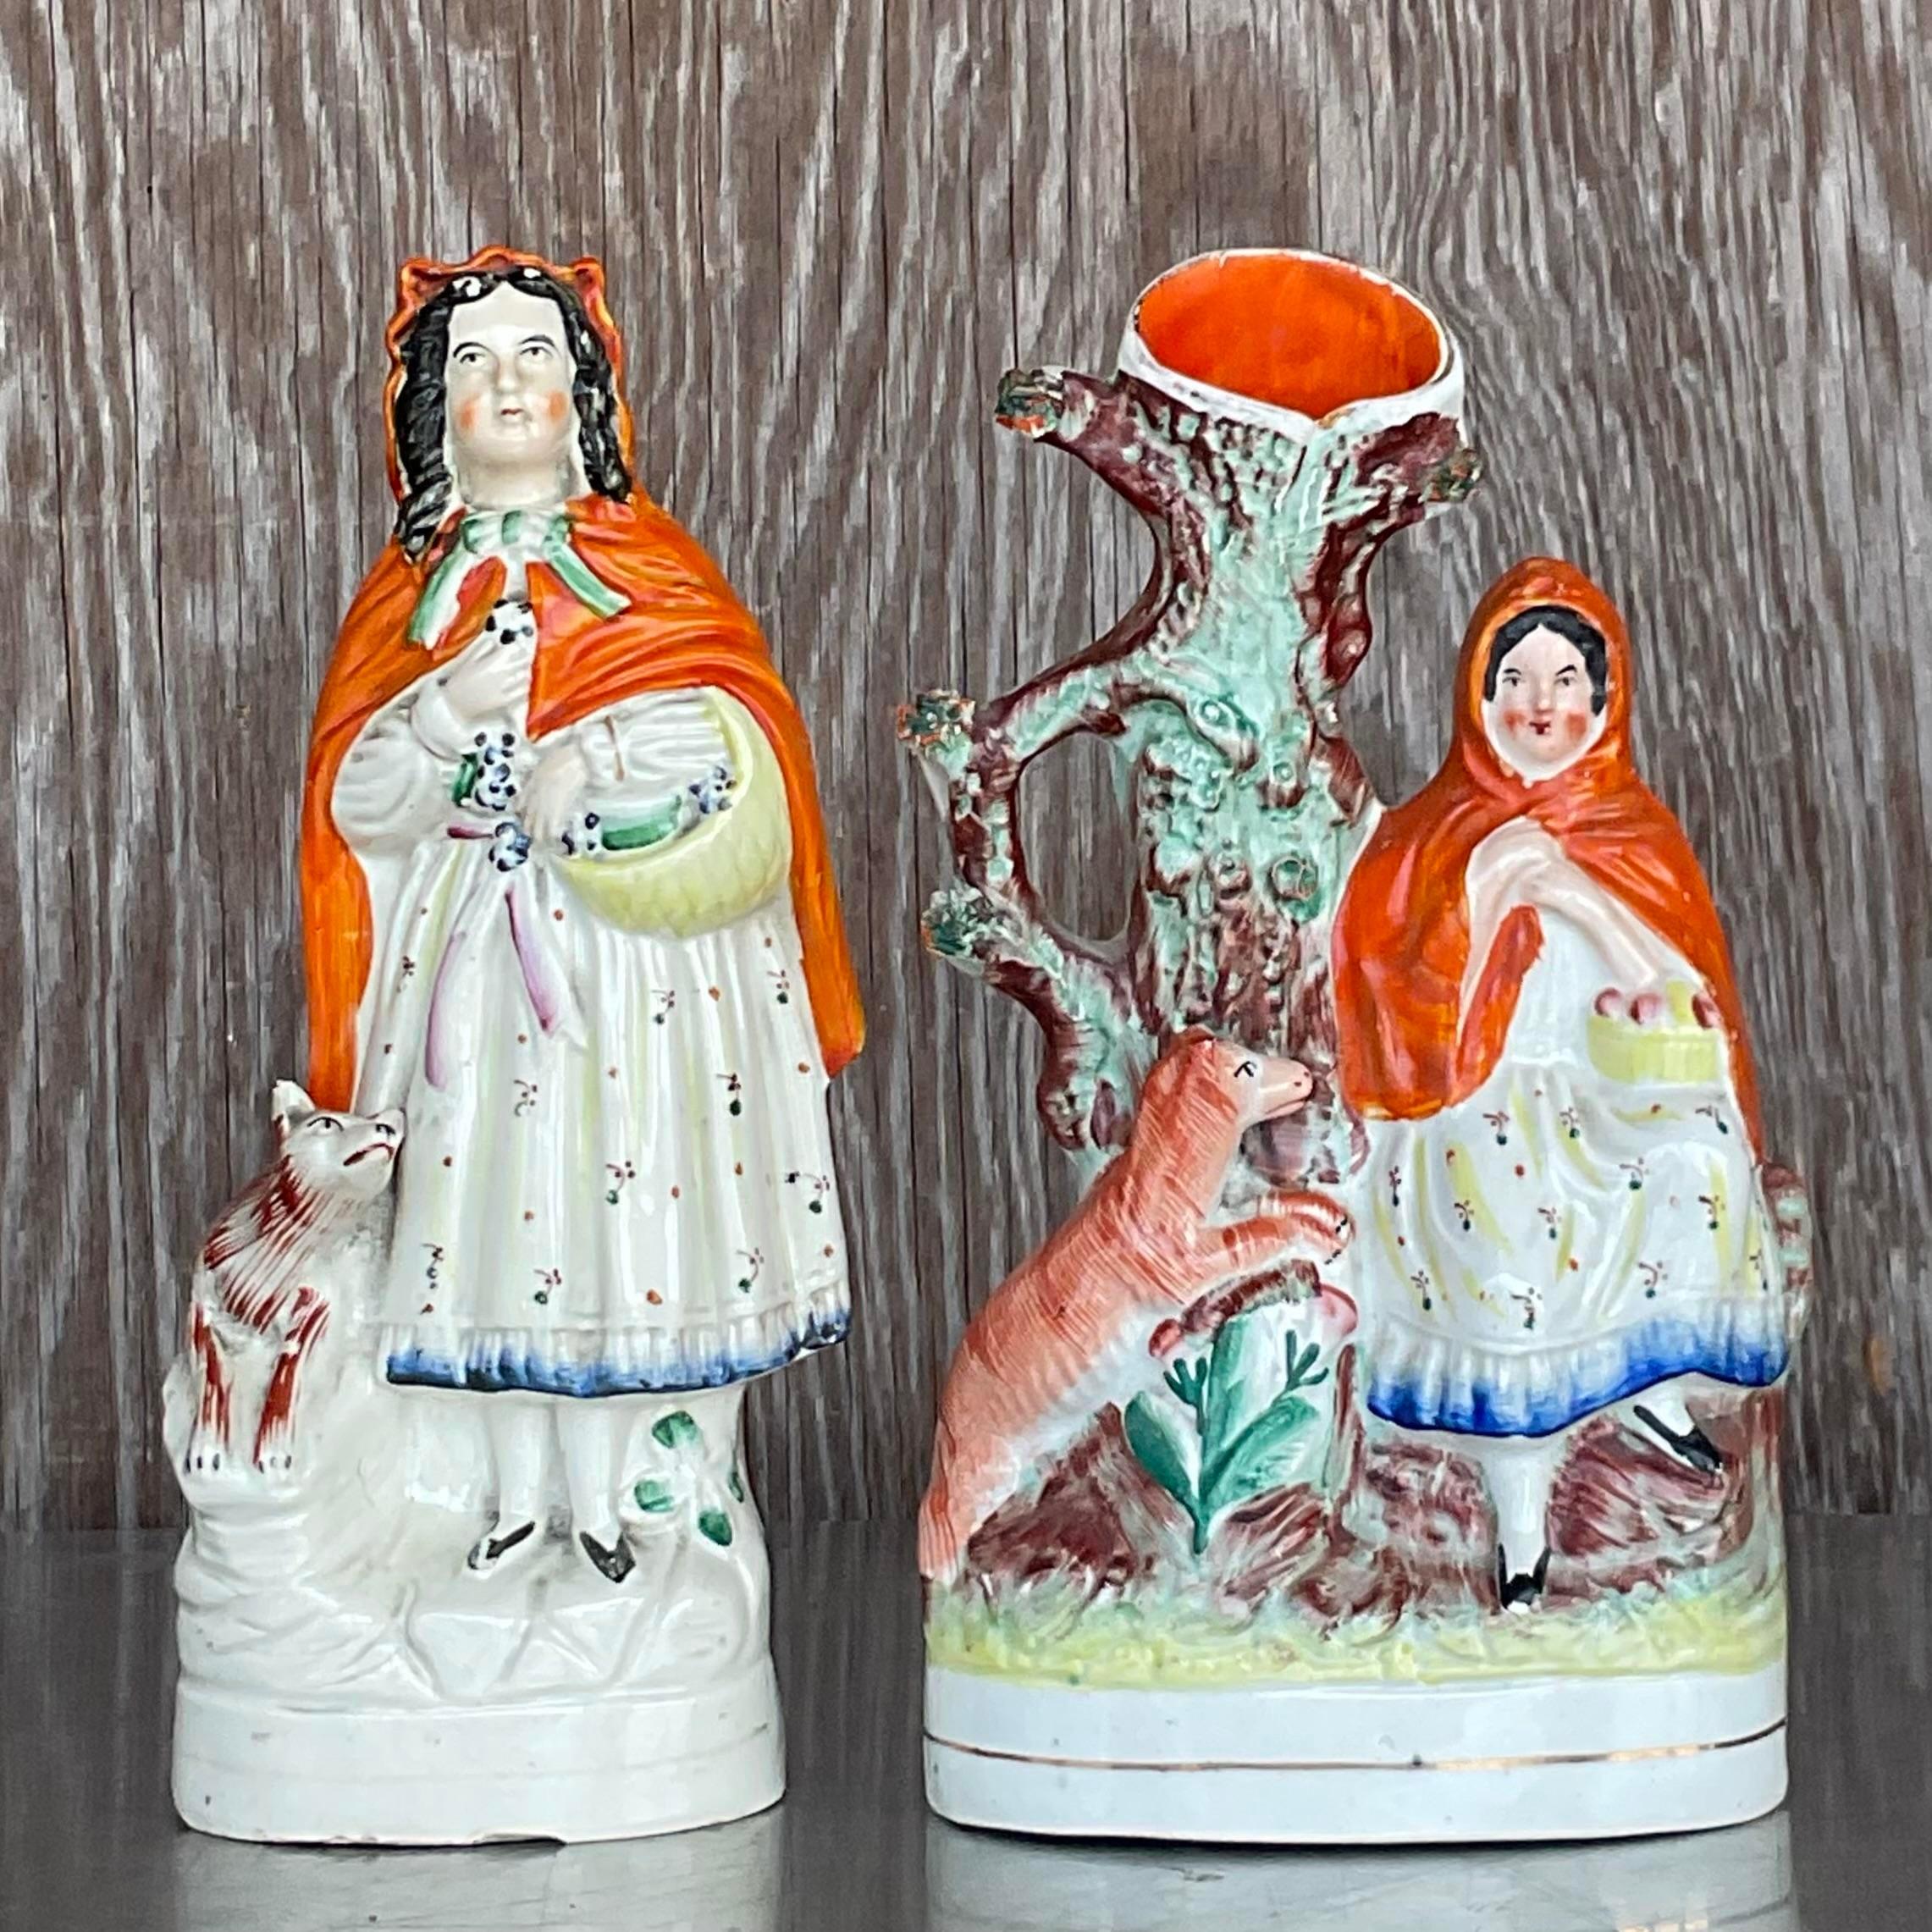 Vintage Regency Staffordshire Style Figurines - Set of 2 For Sale 2